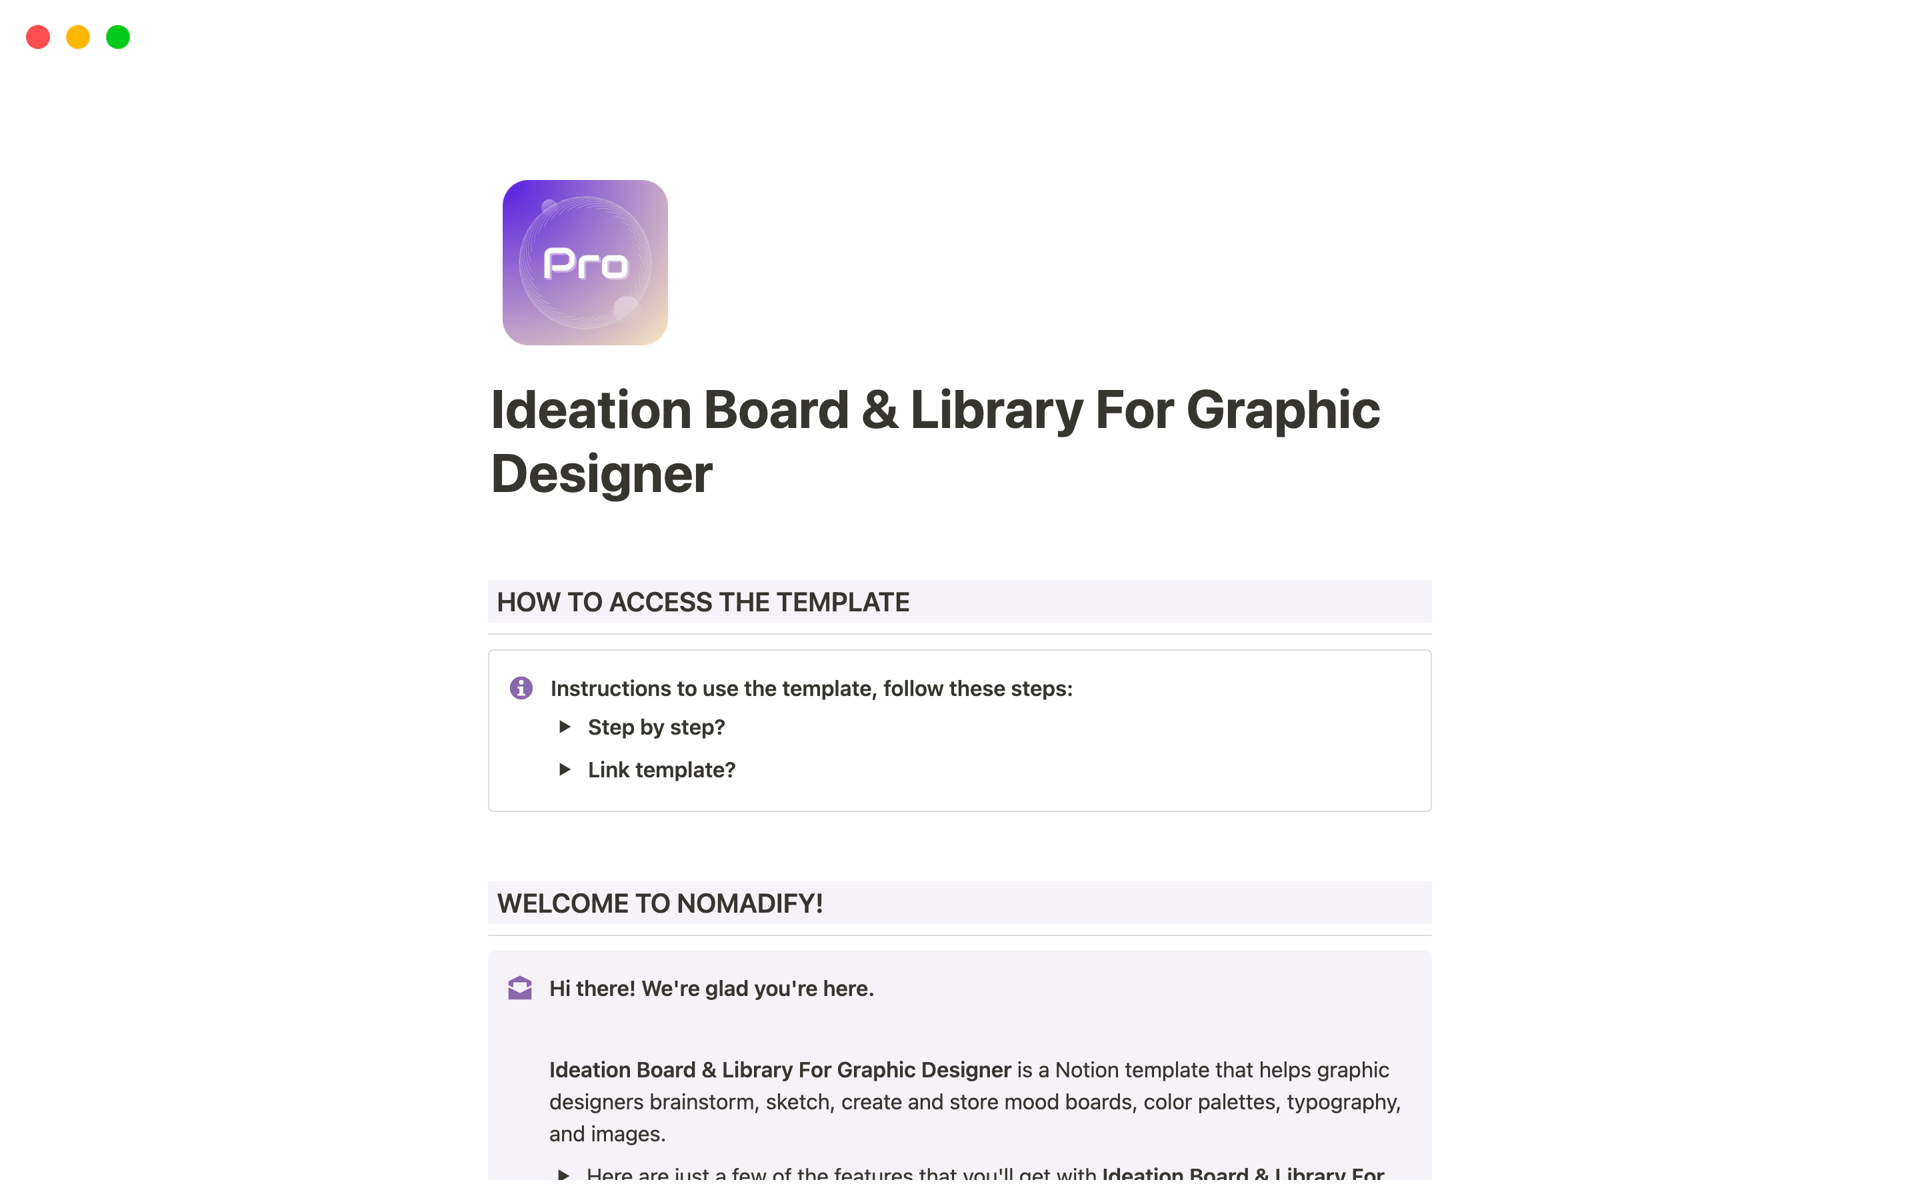 Ideation Board & Library For Graphic Designer님의 템플릿 미리보기